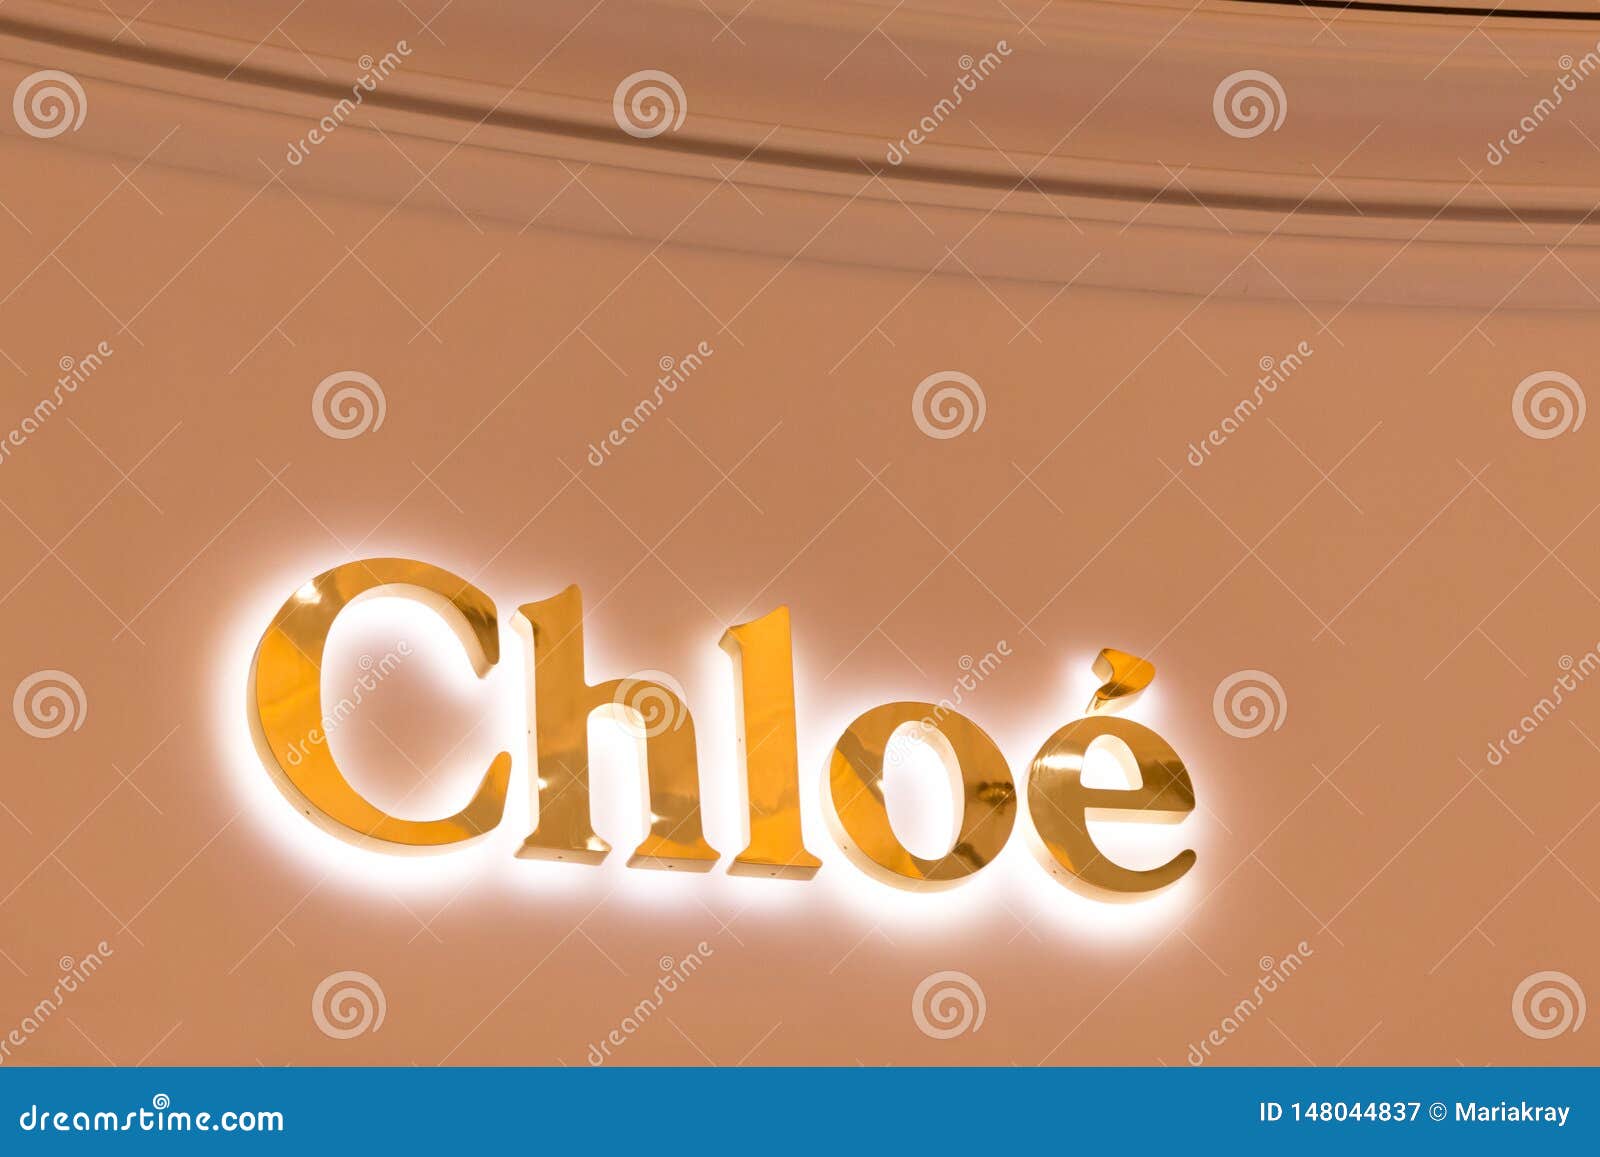 Chloe Logo PNG Images, Chloe Logo Clipart Free Download